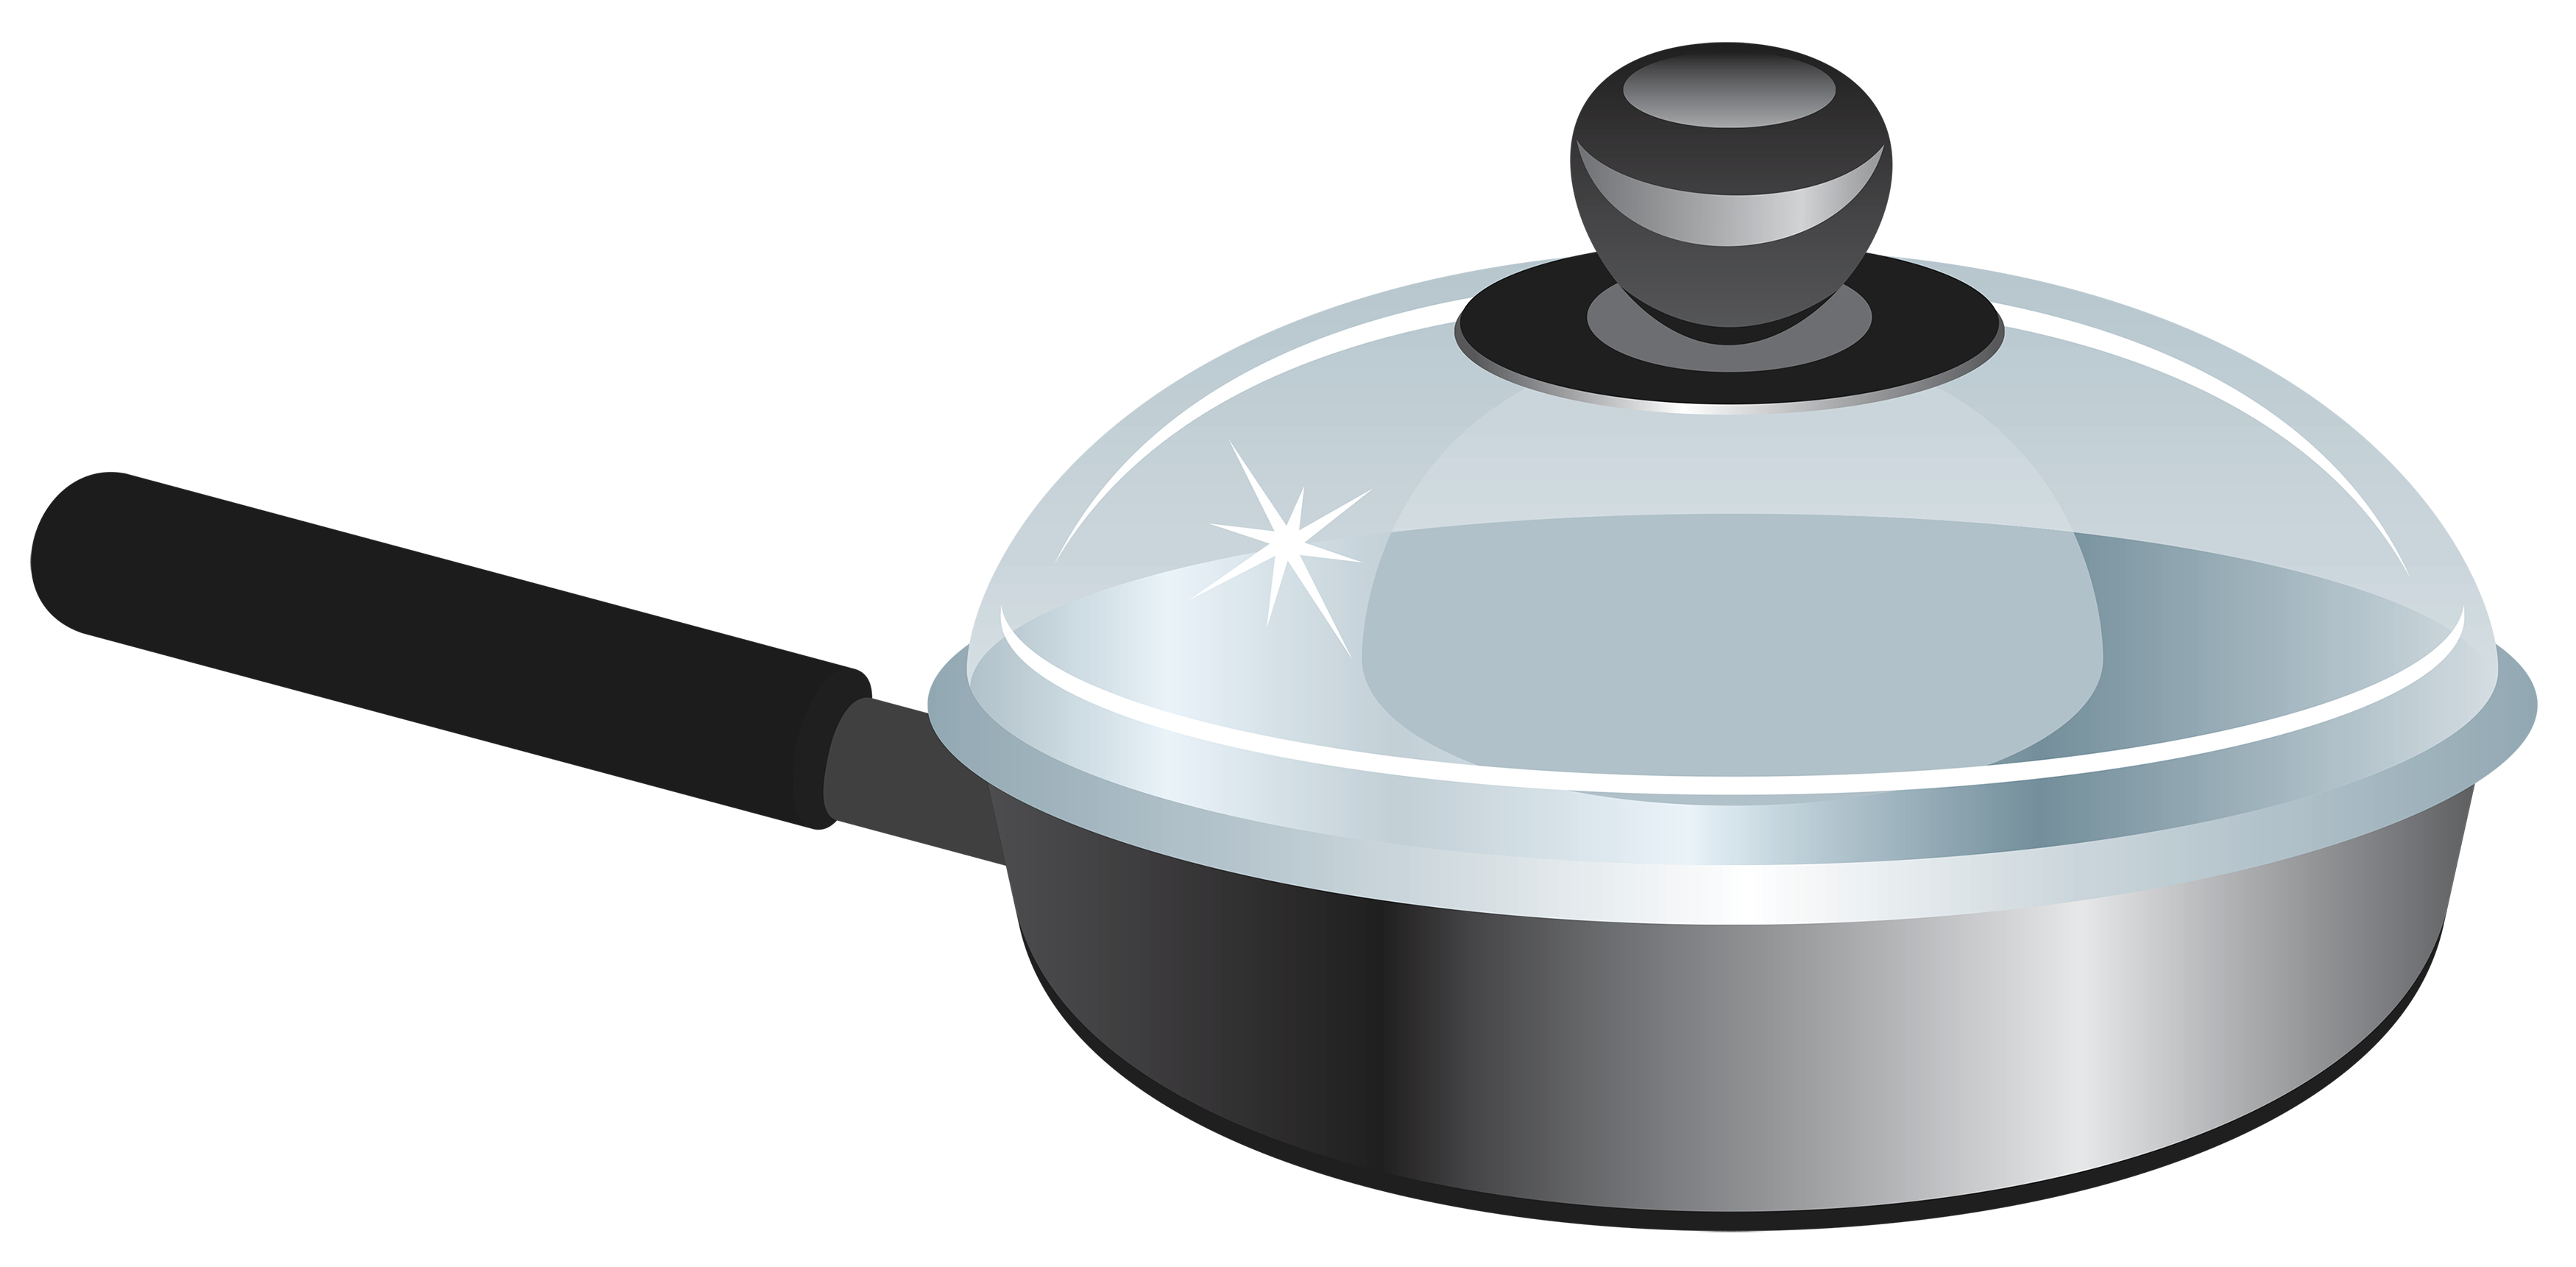 deep frying pan with lid